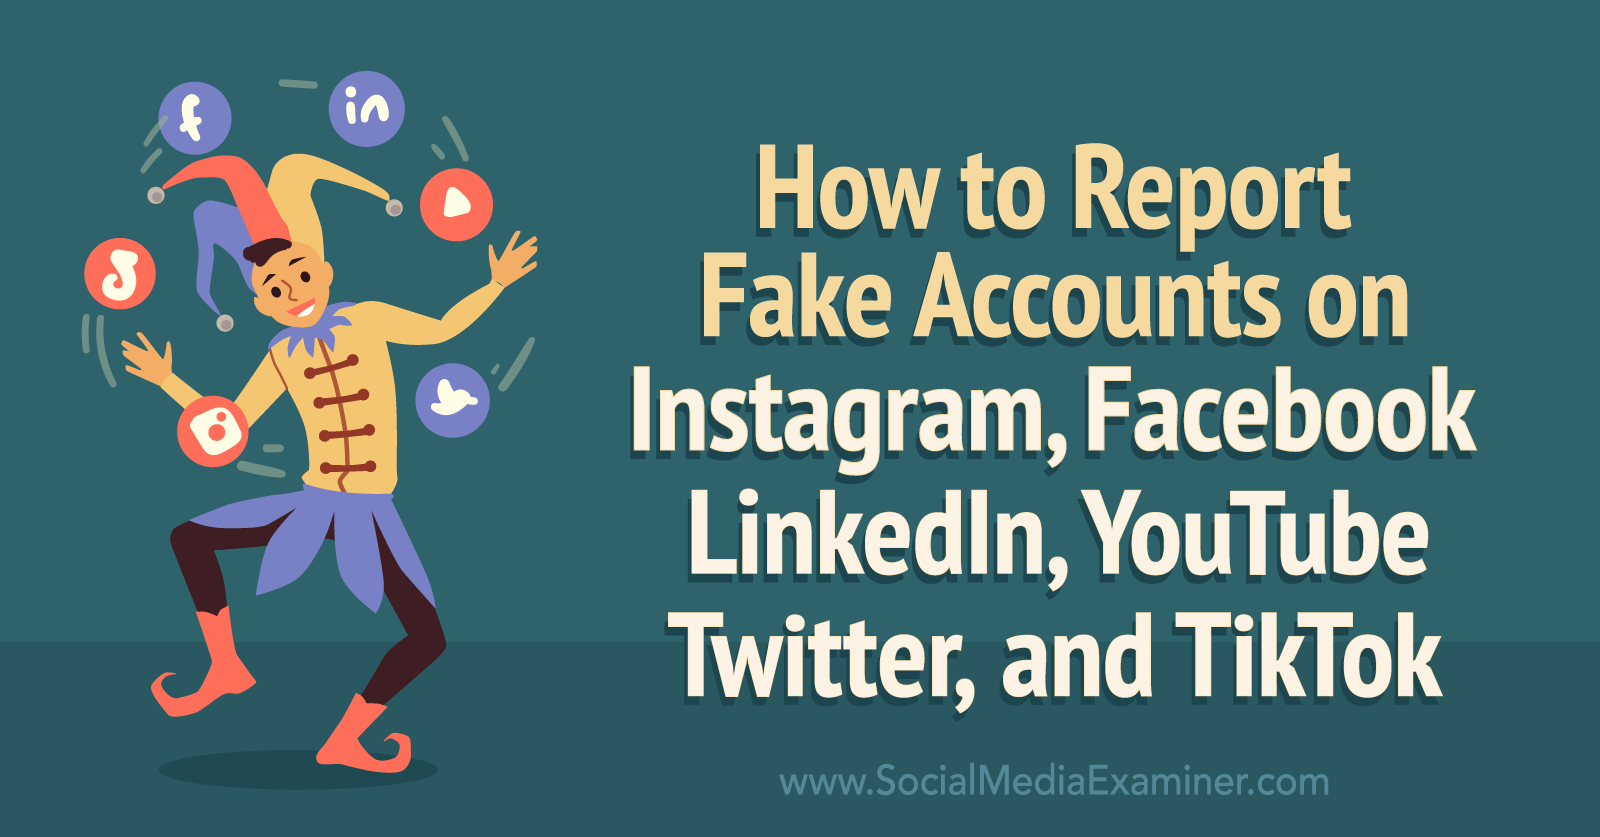 How to Report Fake Accounts on Instagram, Facebook, LinkedIn, YouTube, Twitter, and TikTok-Social Media Examiner